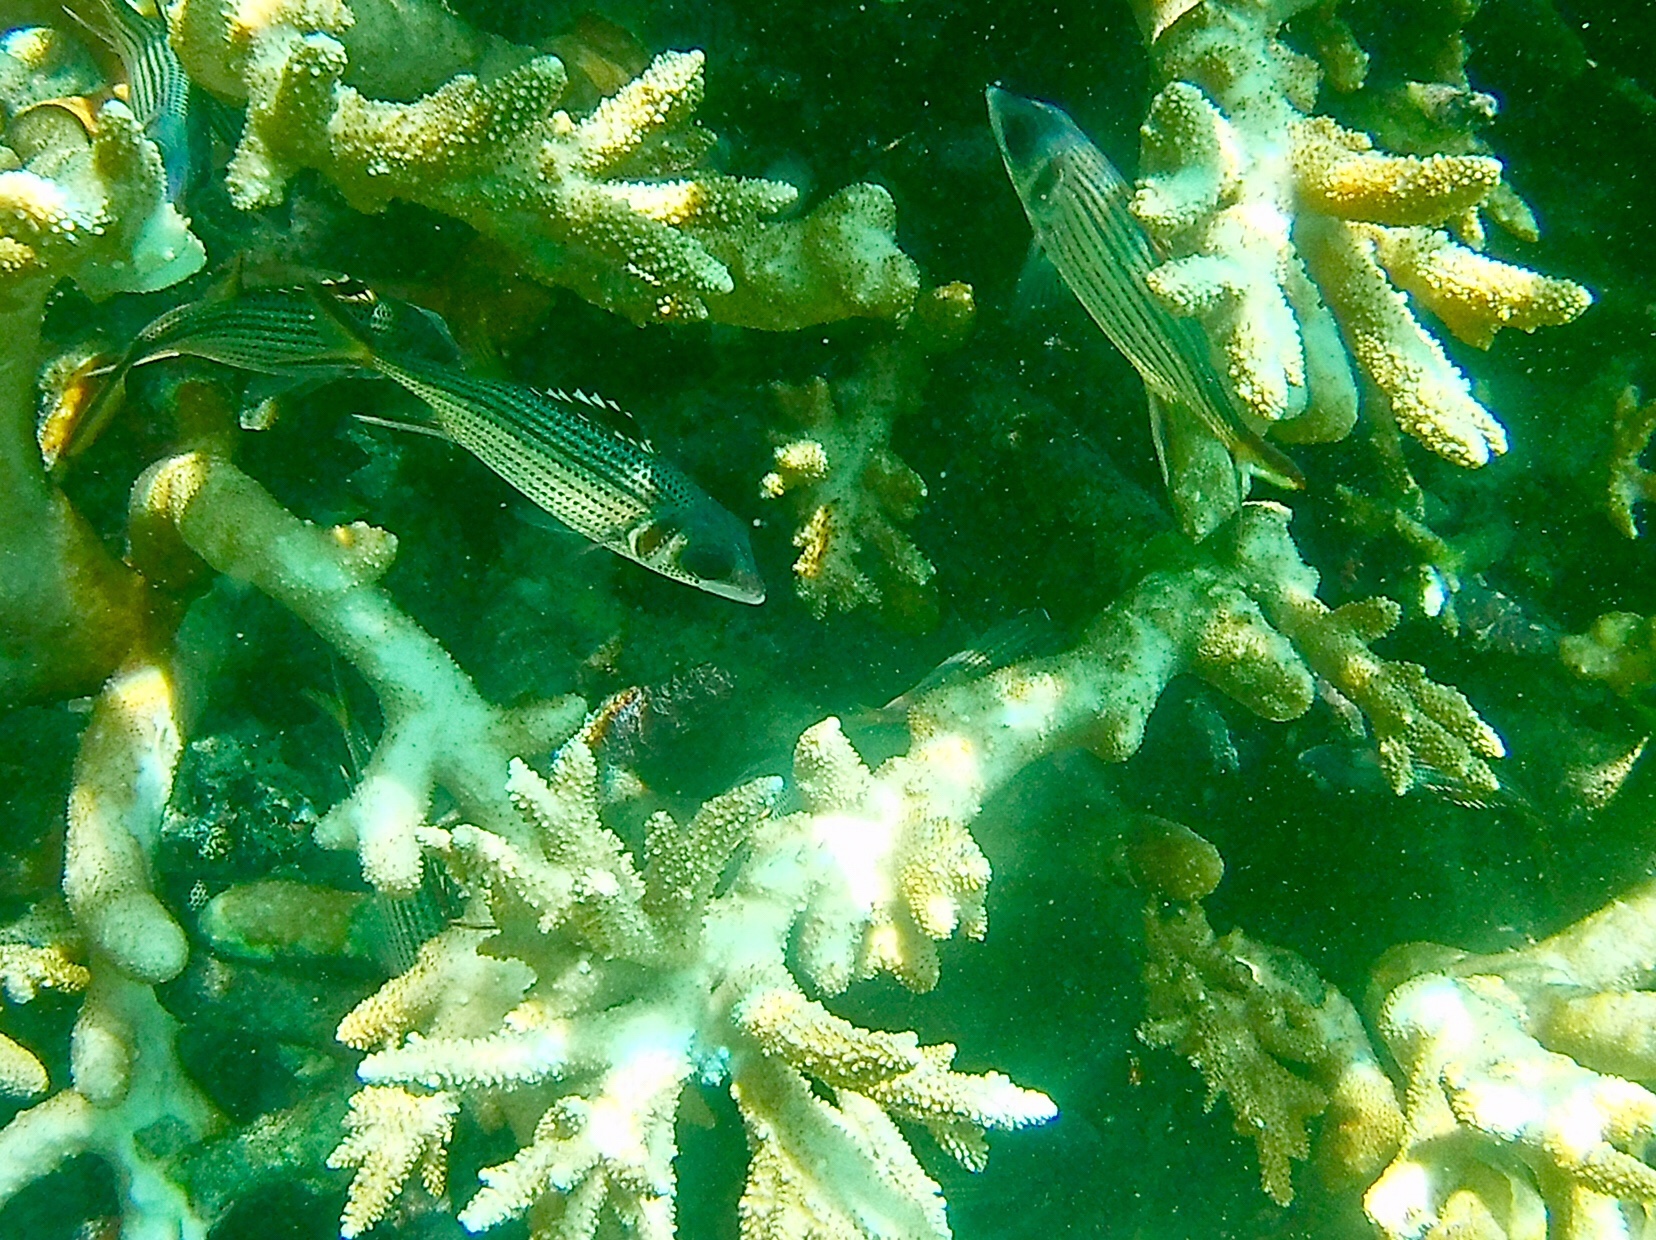 Reef fish in the tide pool